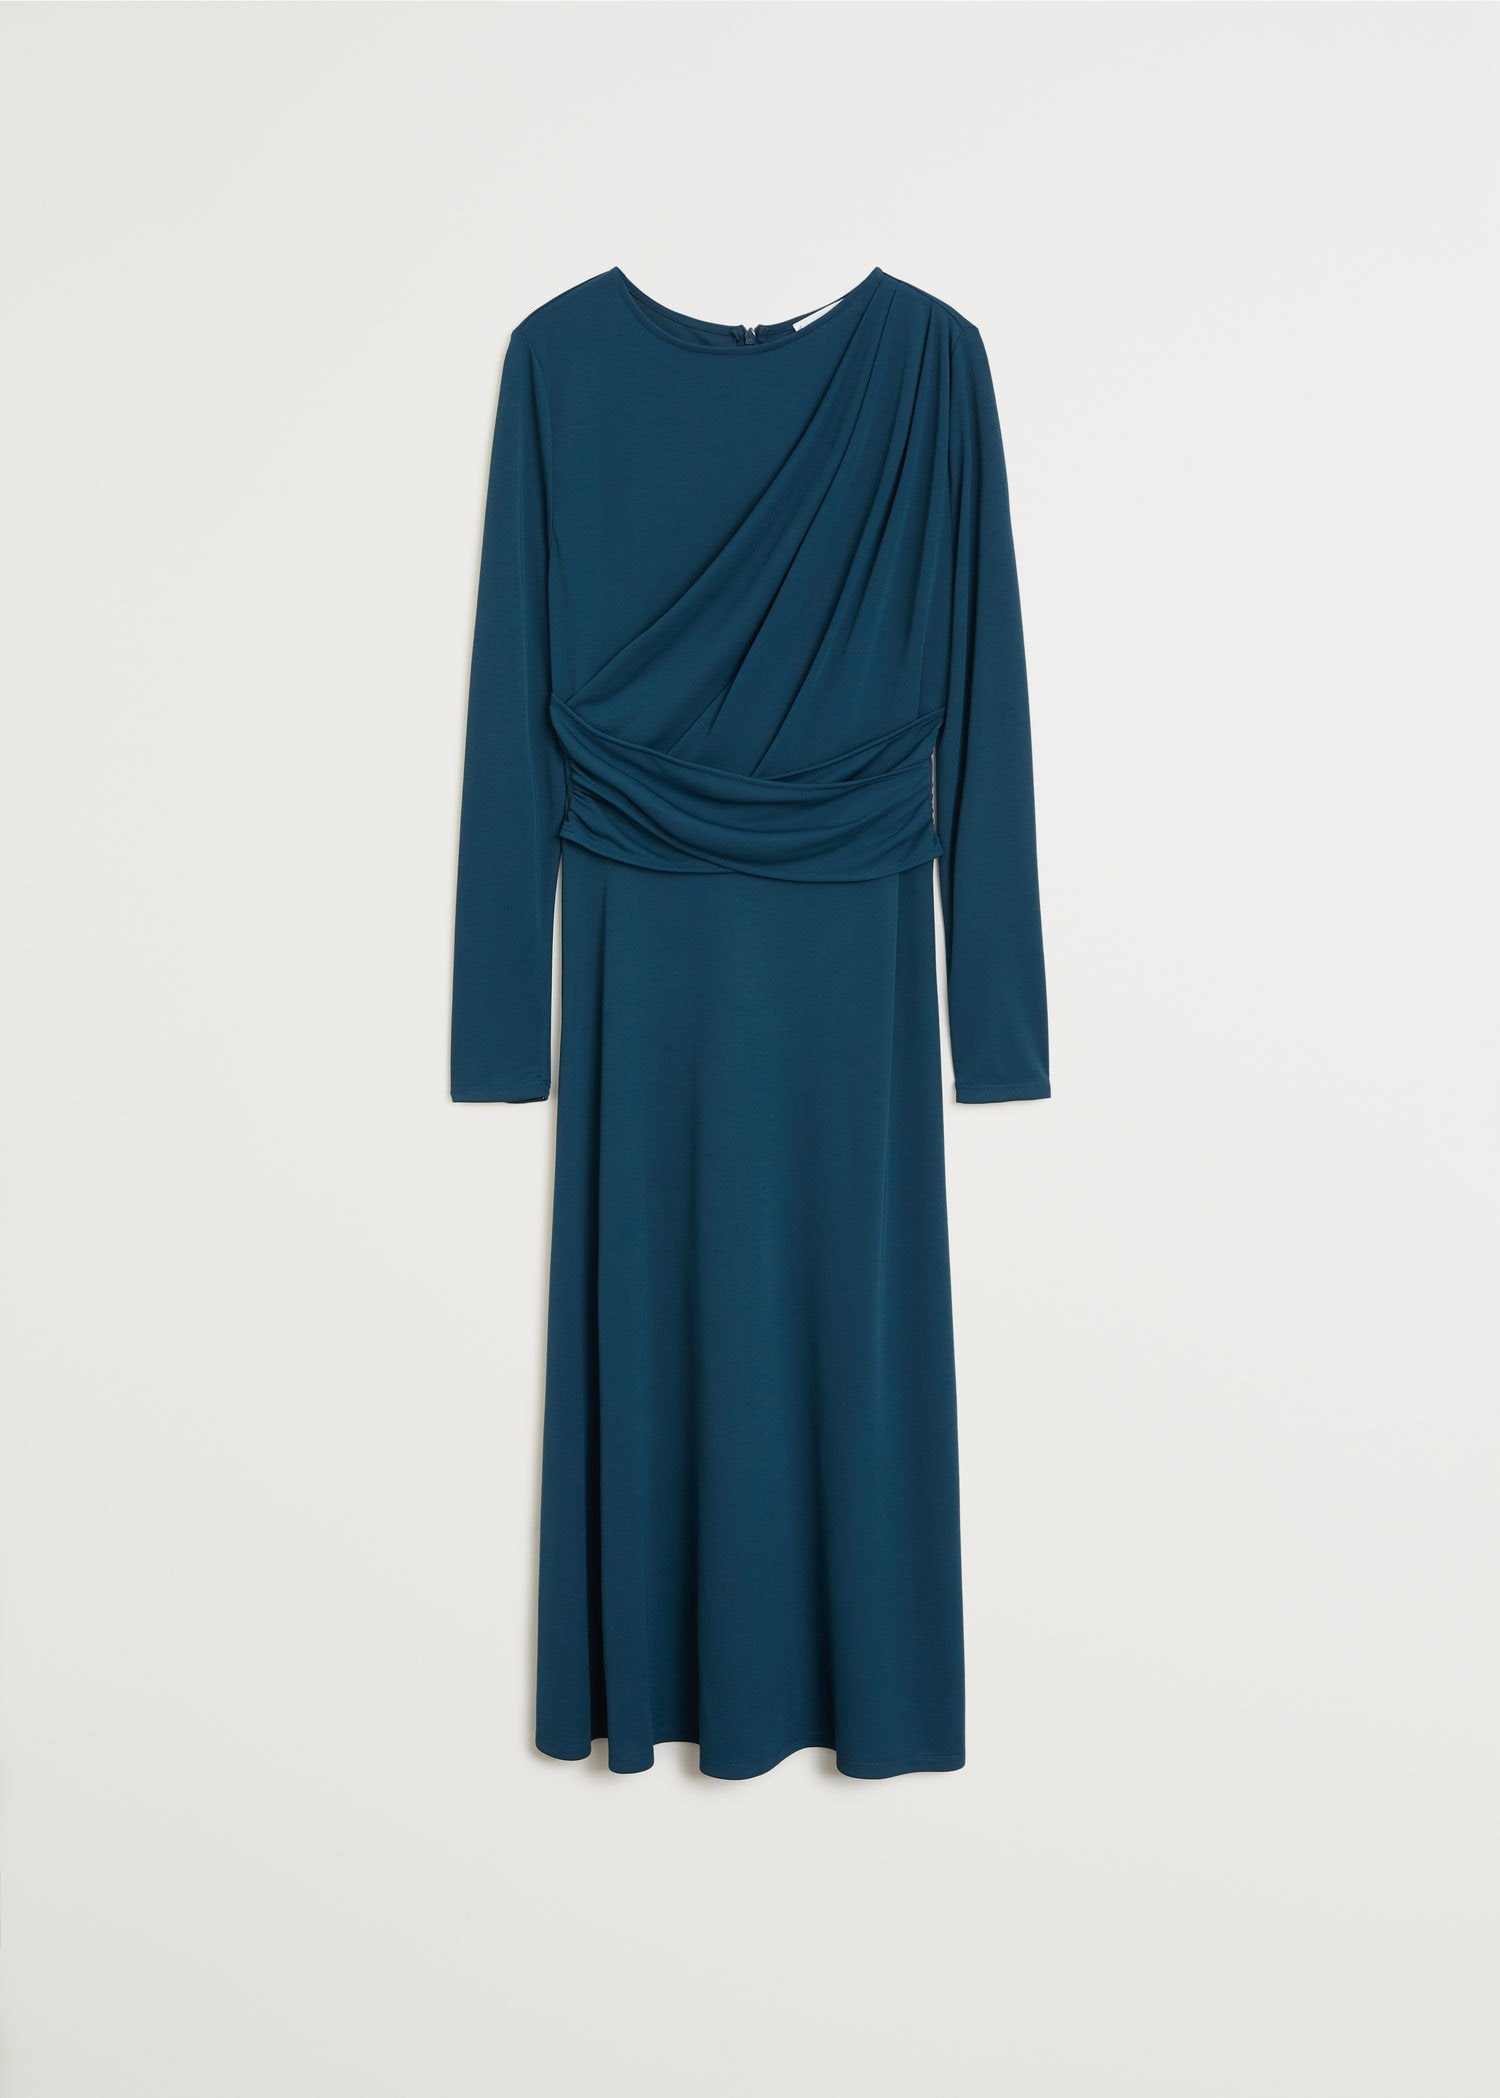 MANGO Ruched Detail Dress in Petrol Blue | Endource